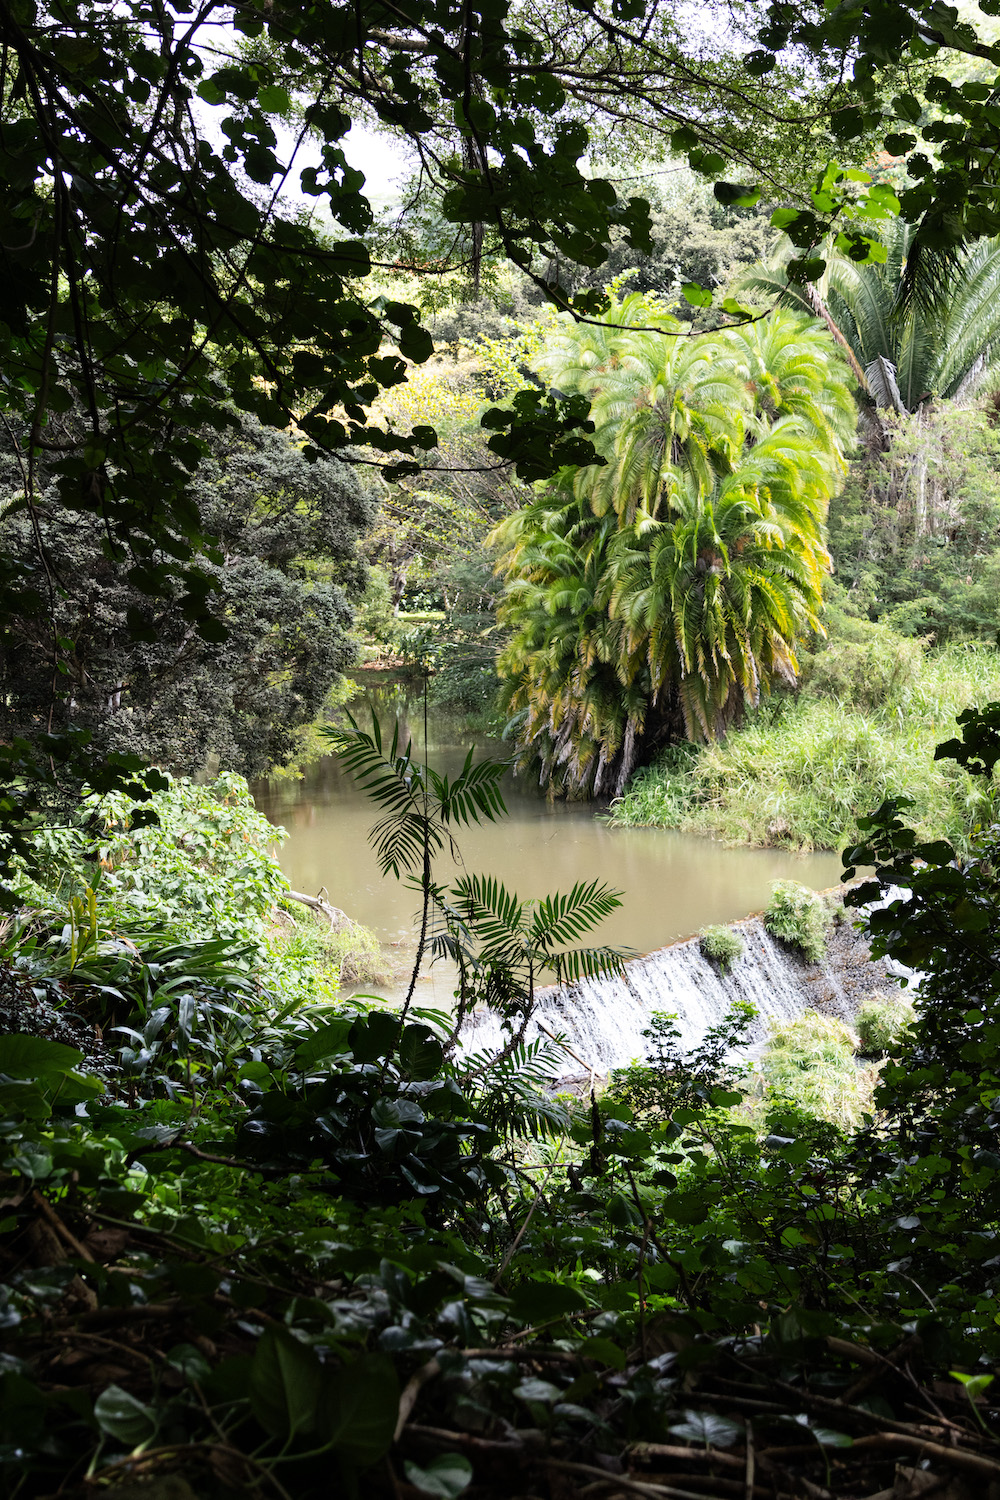 A waterfall in Kauai surrounded by native Hawaiian plants and trees